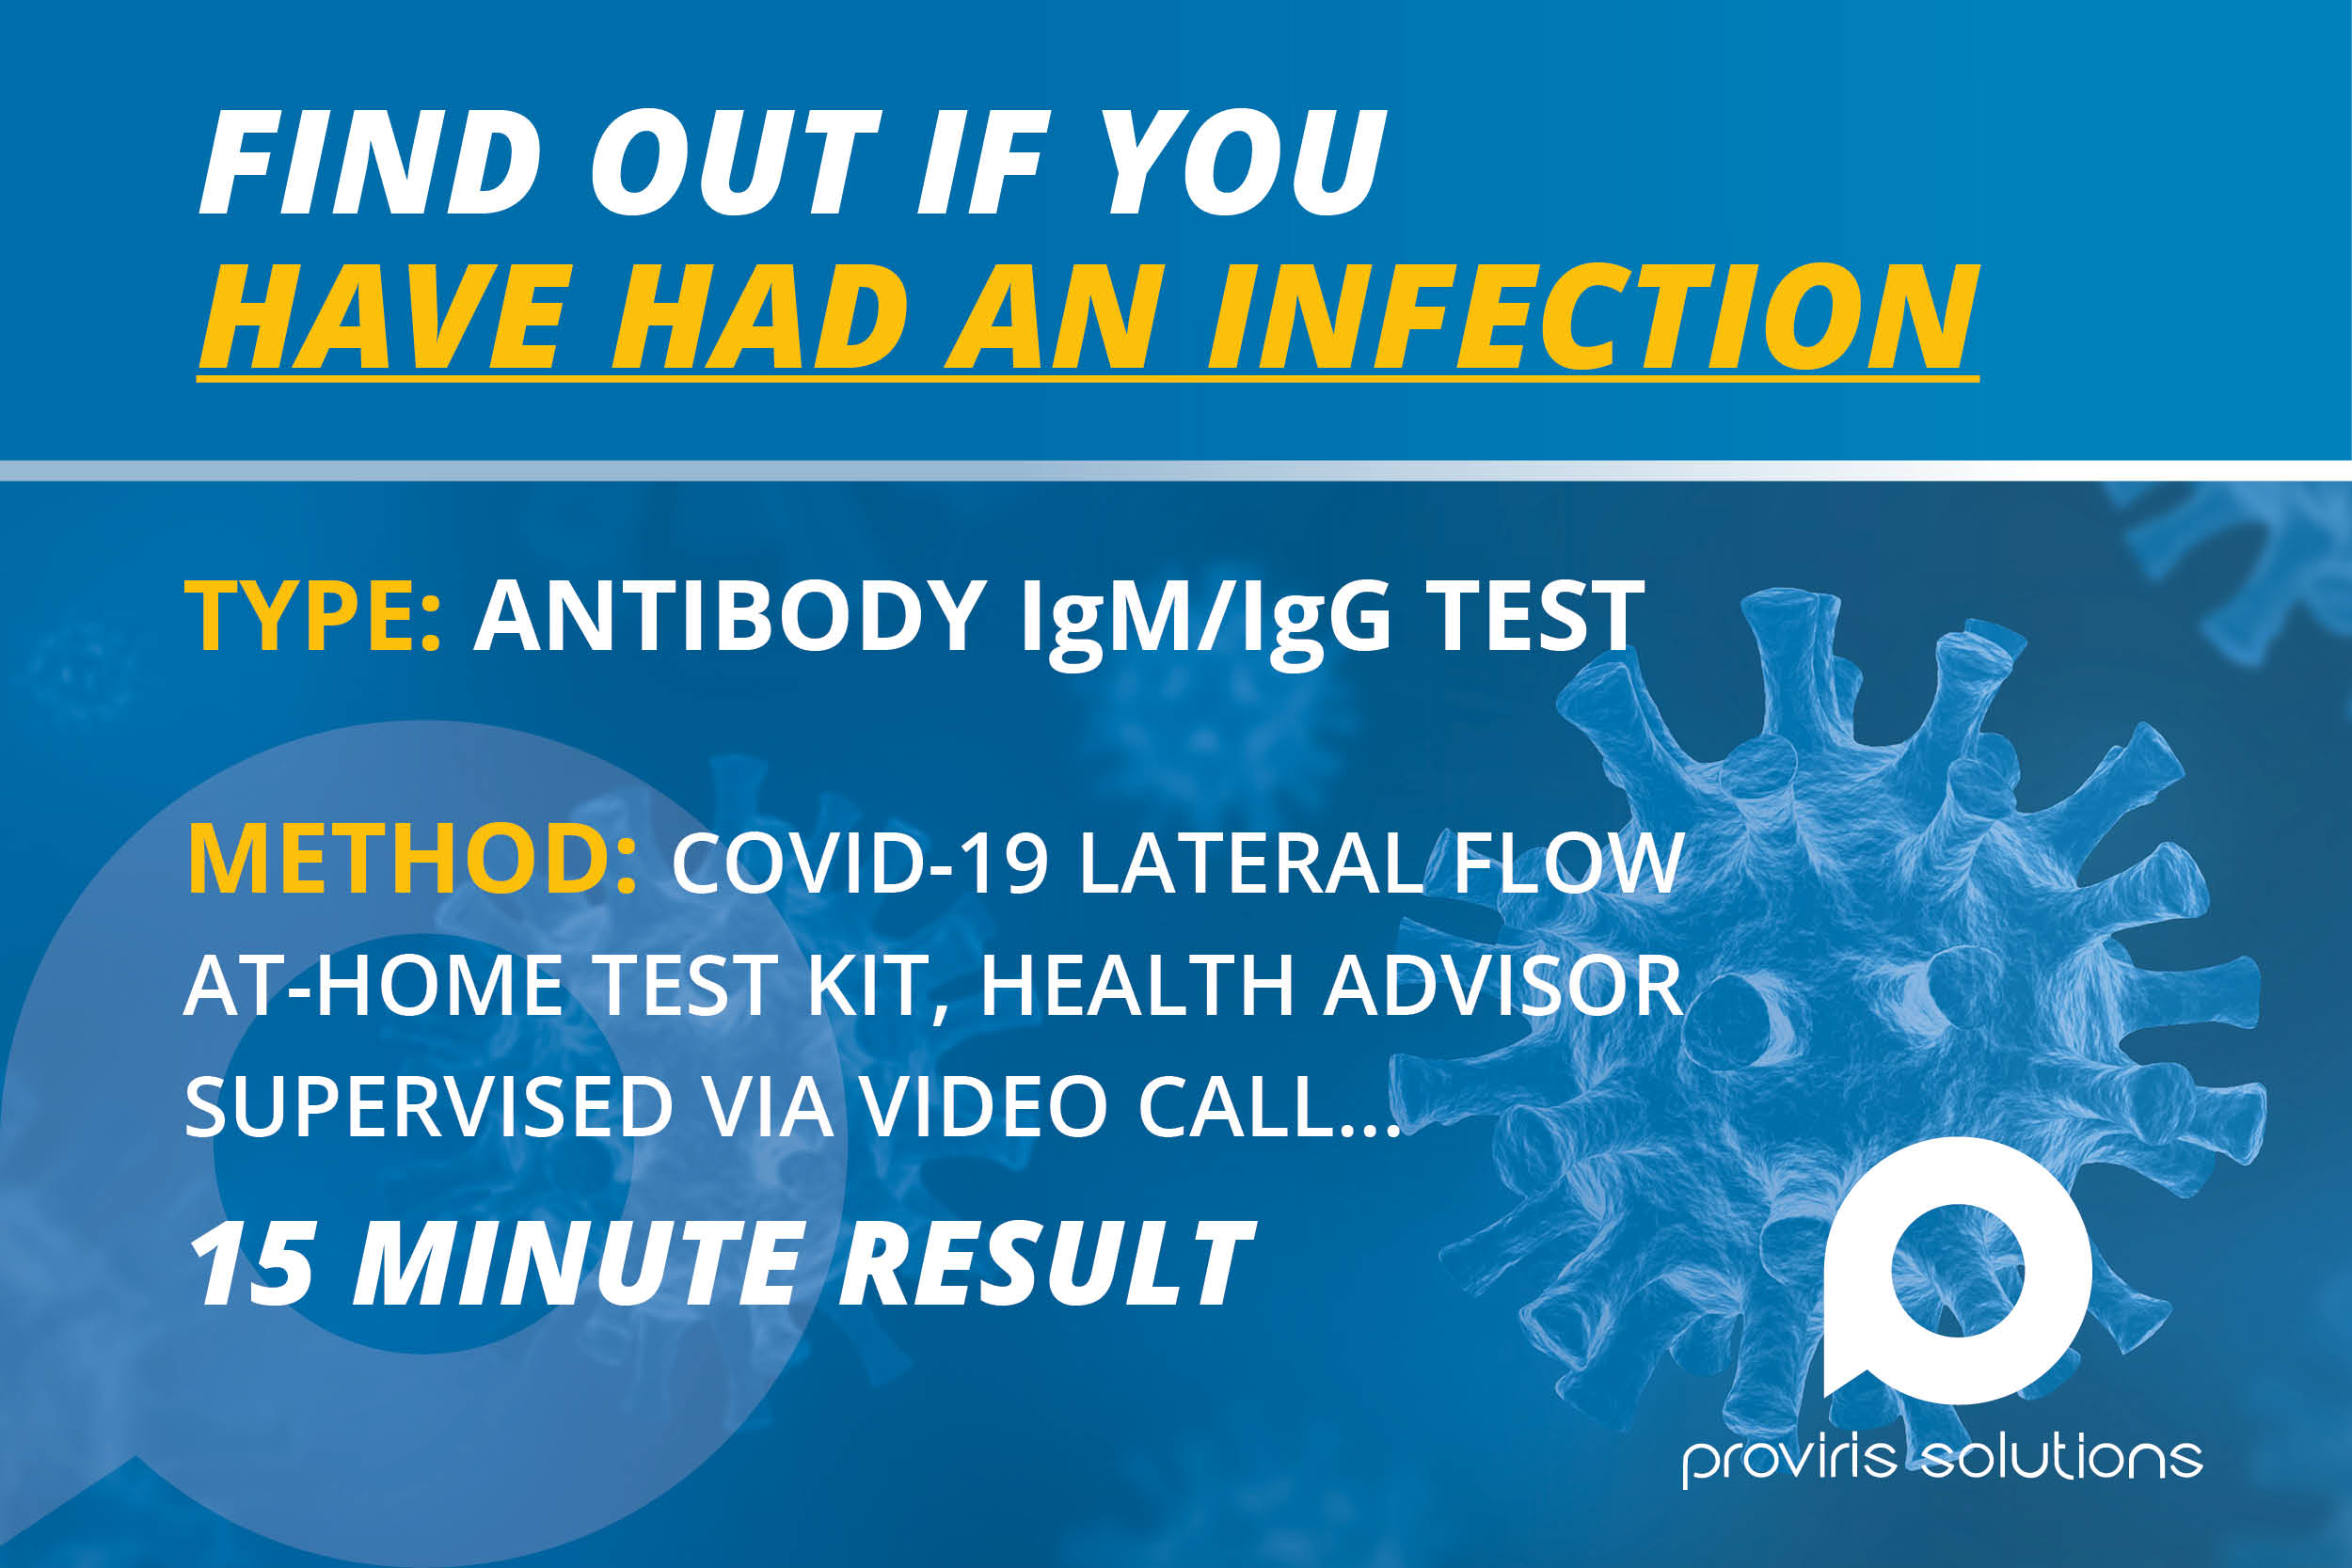 Covid-19 Antibody Tests